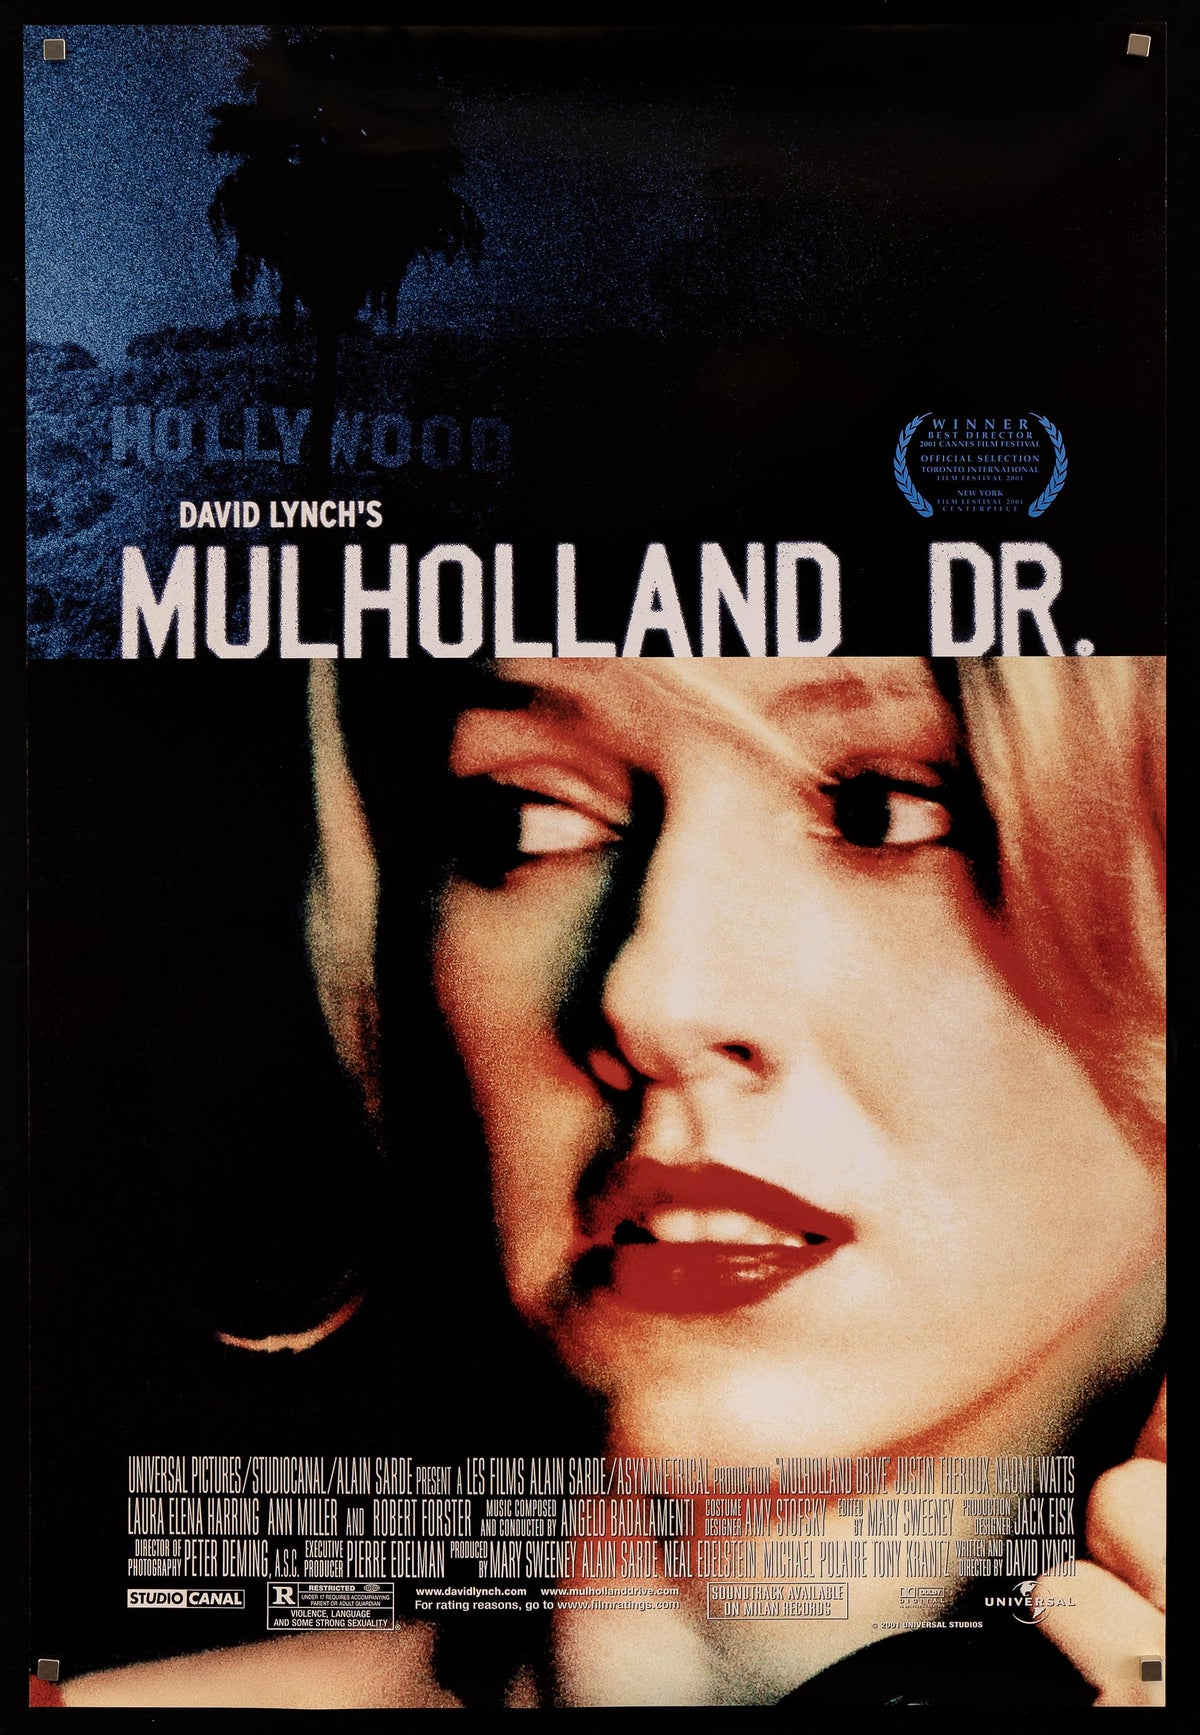 Mulholland Drive 1 Sheet (27x41) Original Vintage Movie Poster